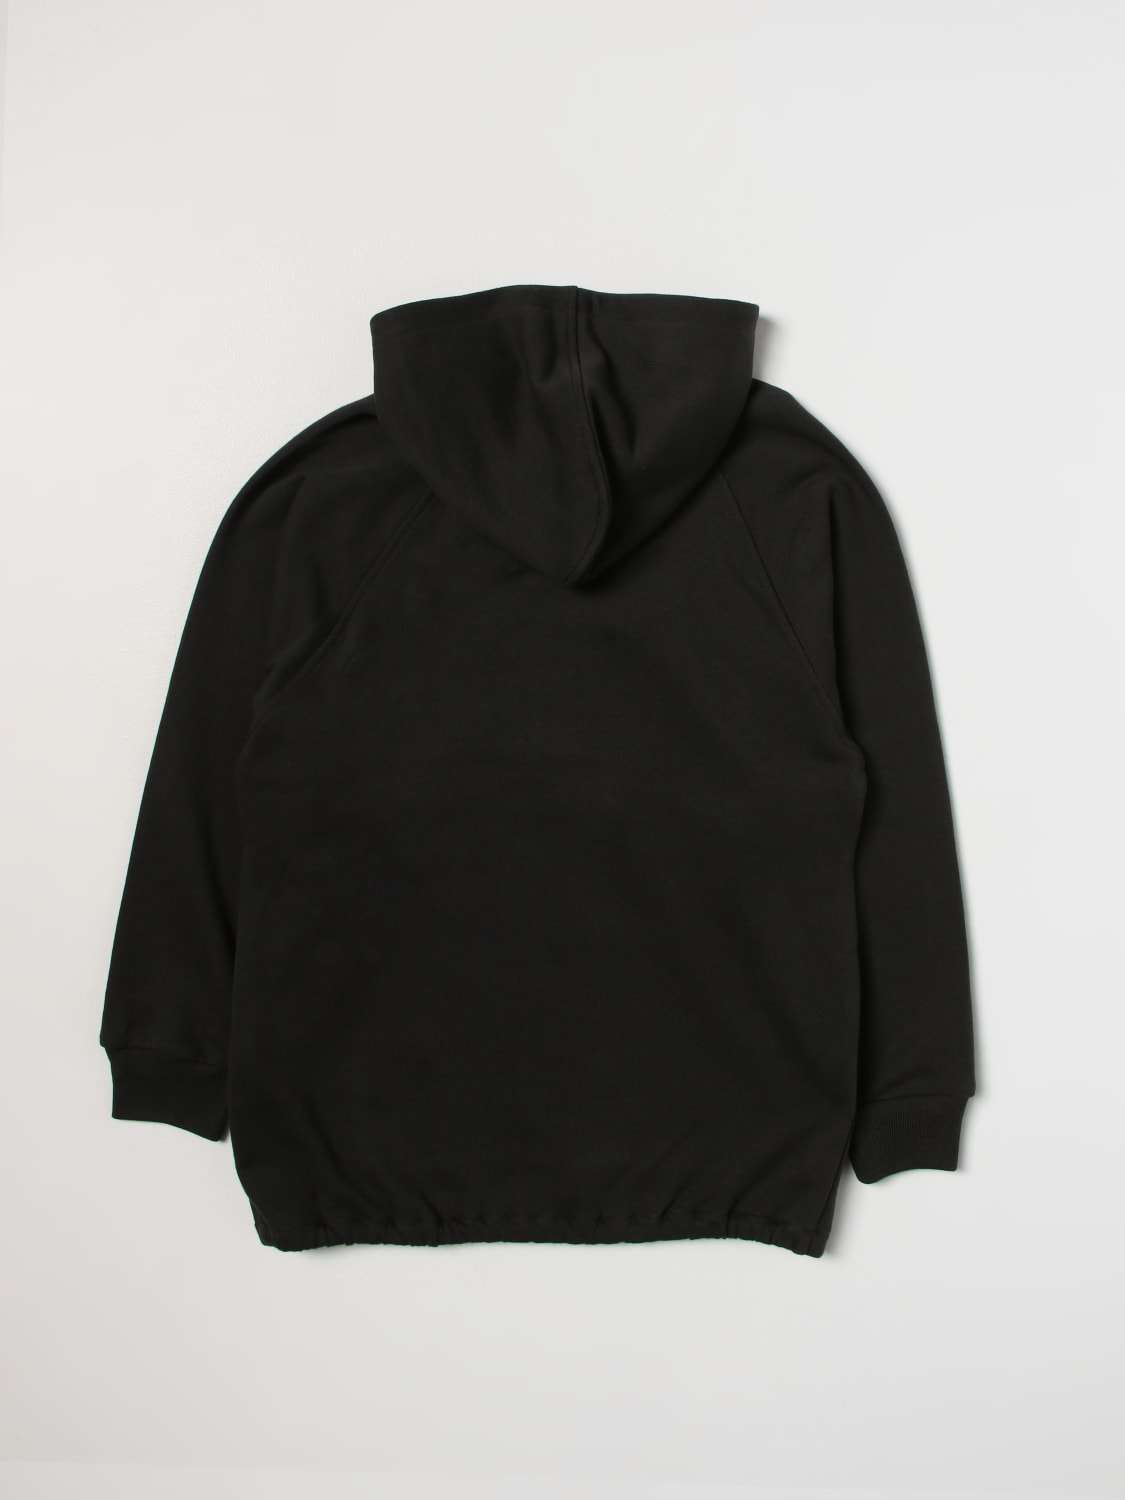 GUCCI: sweatshirt in wool blend - Black | Gucci sweater 653666XJDKA ...